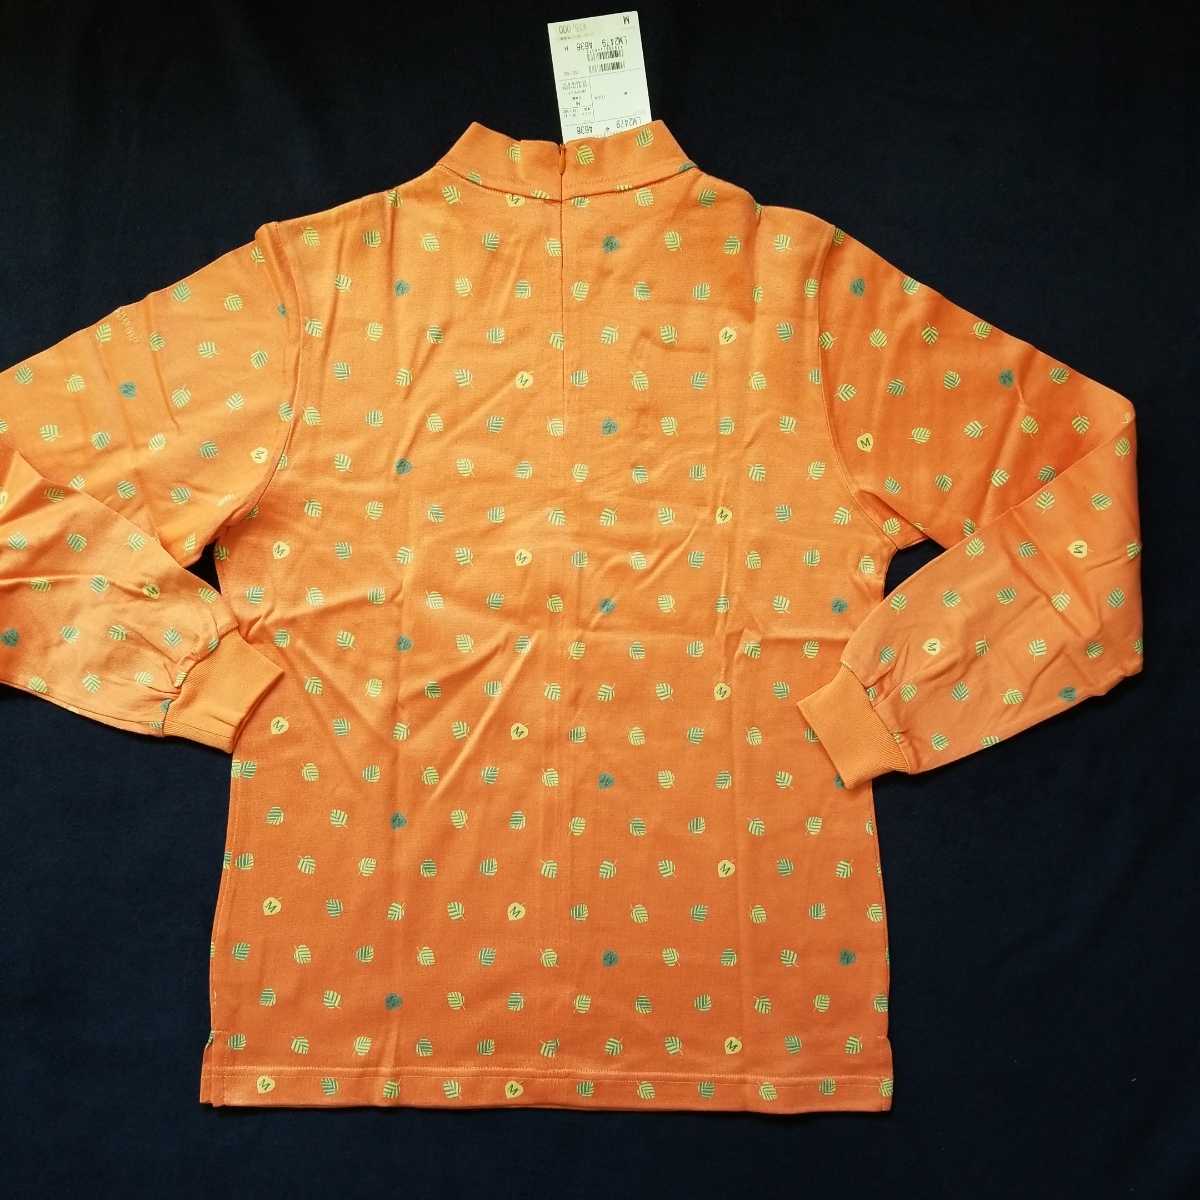 MUNSINGWEARマンシングウェア/レディースハイネックシャツ/オレンジMサイズ/￥16500(15000+税)/後ろファスナー付き/洗濯機可/日本製_画像4